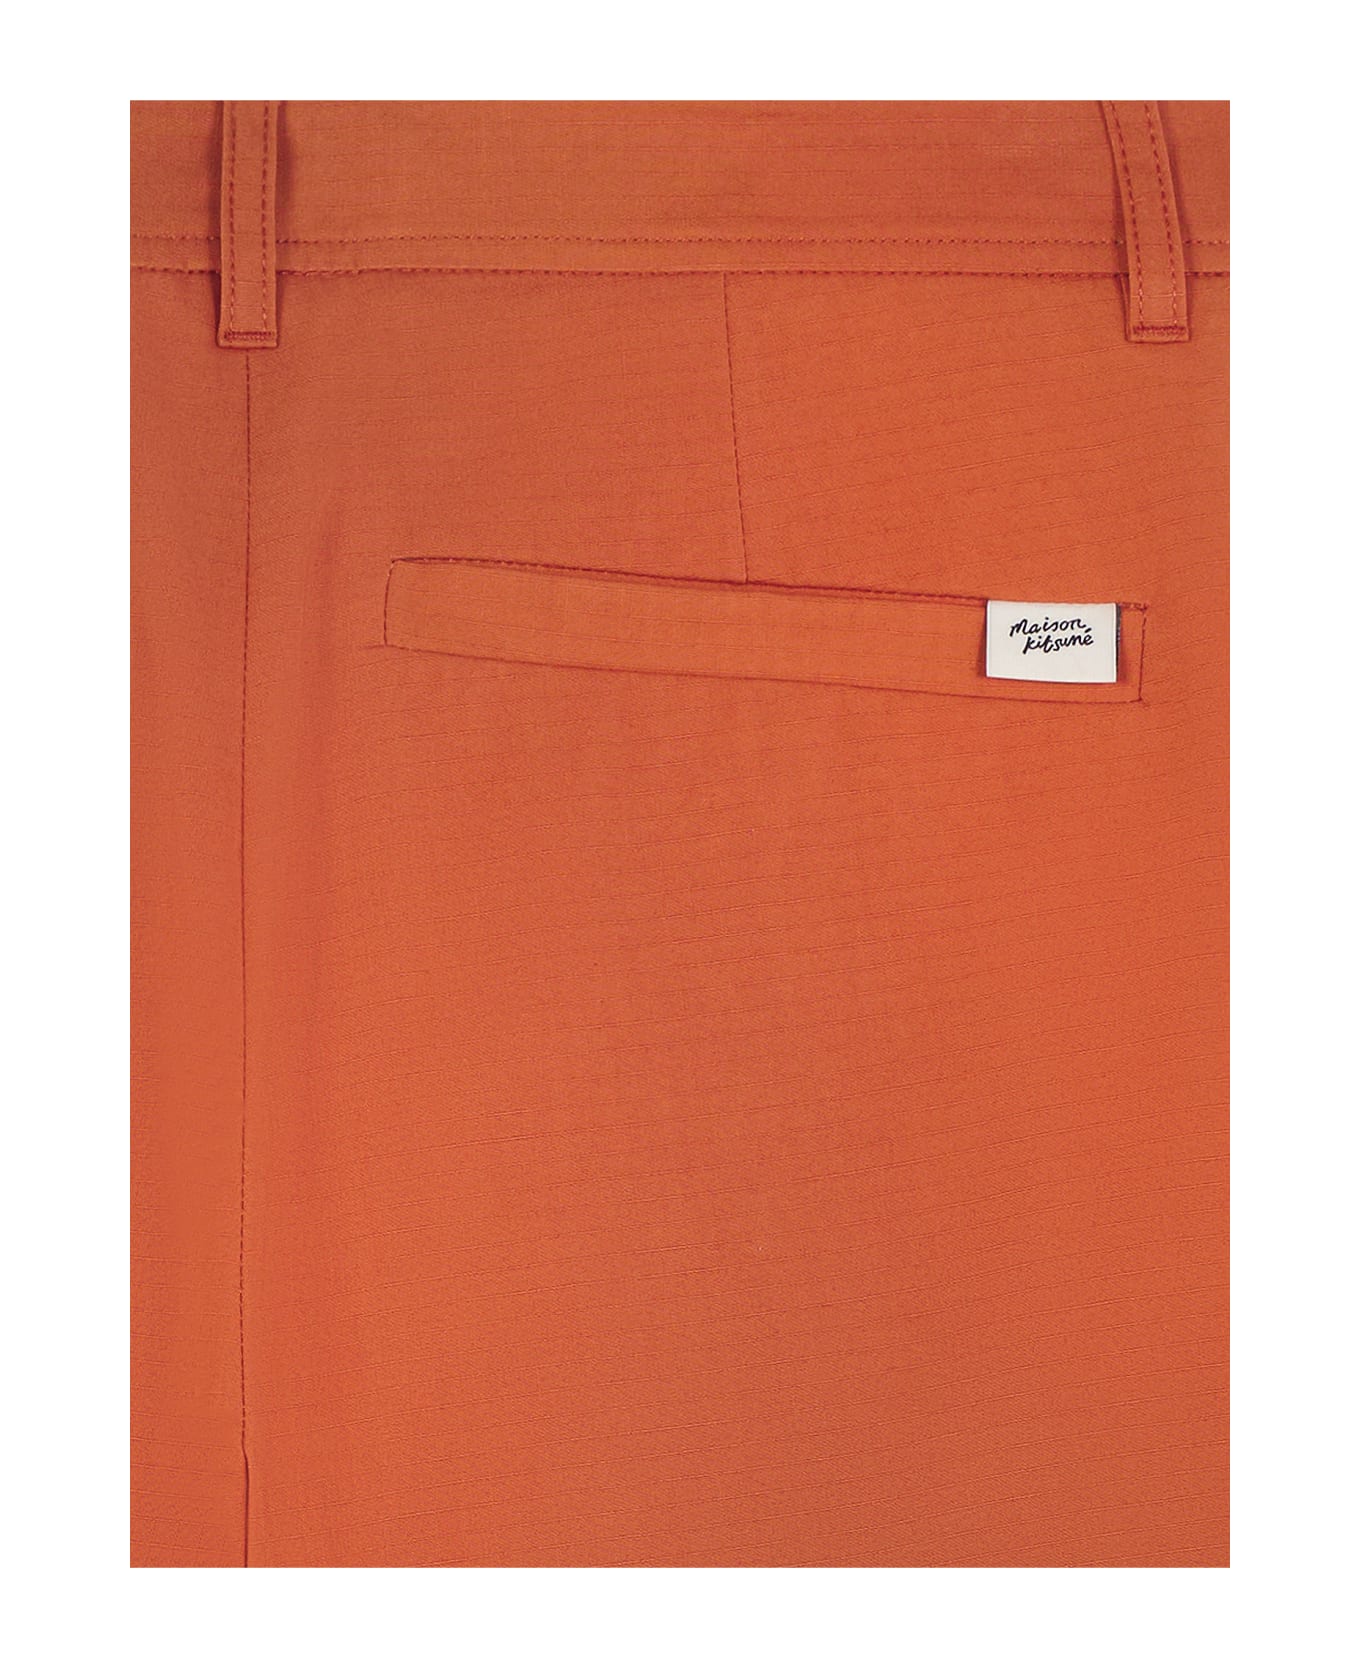 Maison Kitsuné Bermuda Shorts - Orange